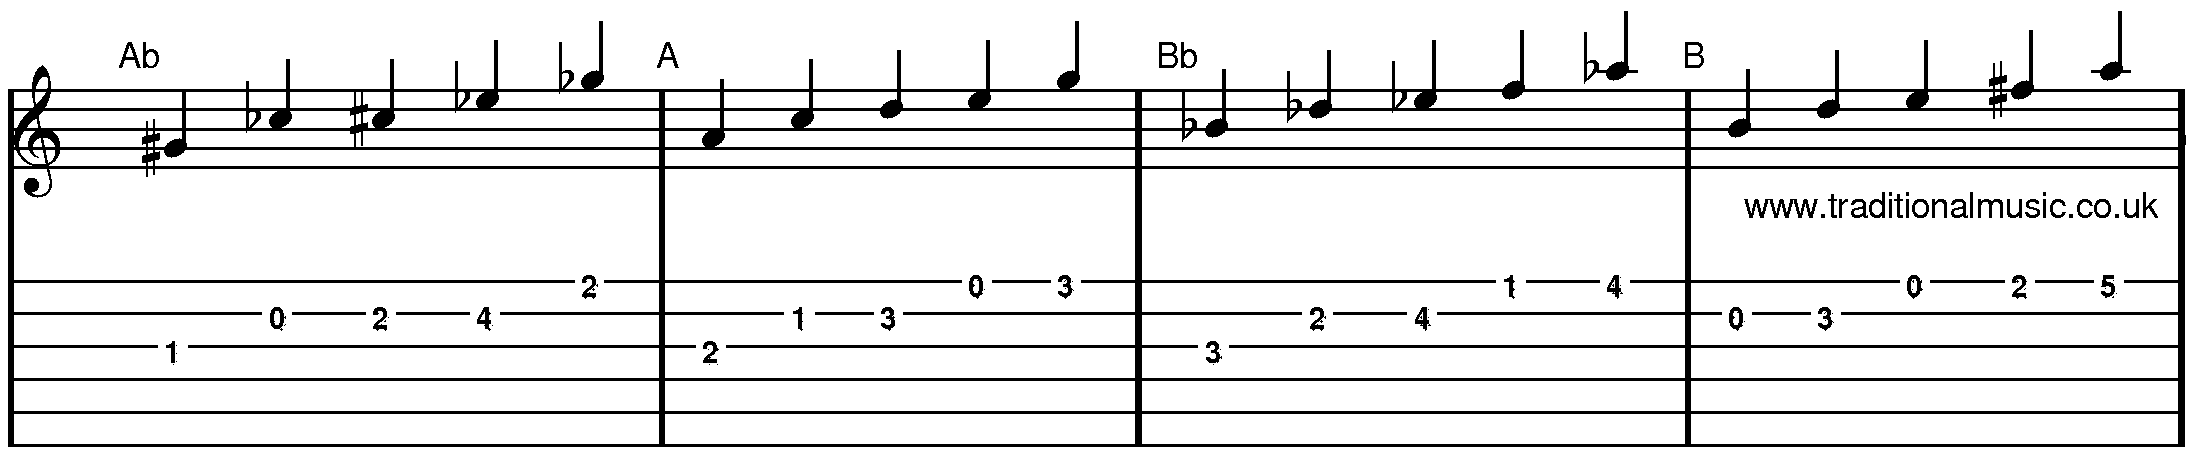 Pentatonic Scales Guitar in standard tuning Ab-B